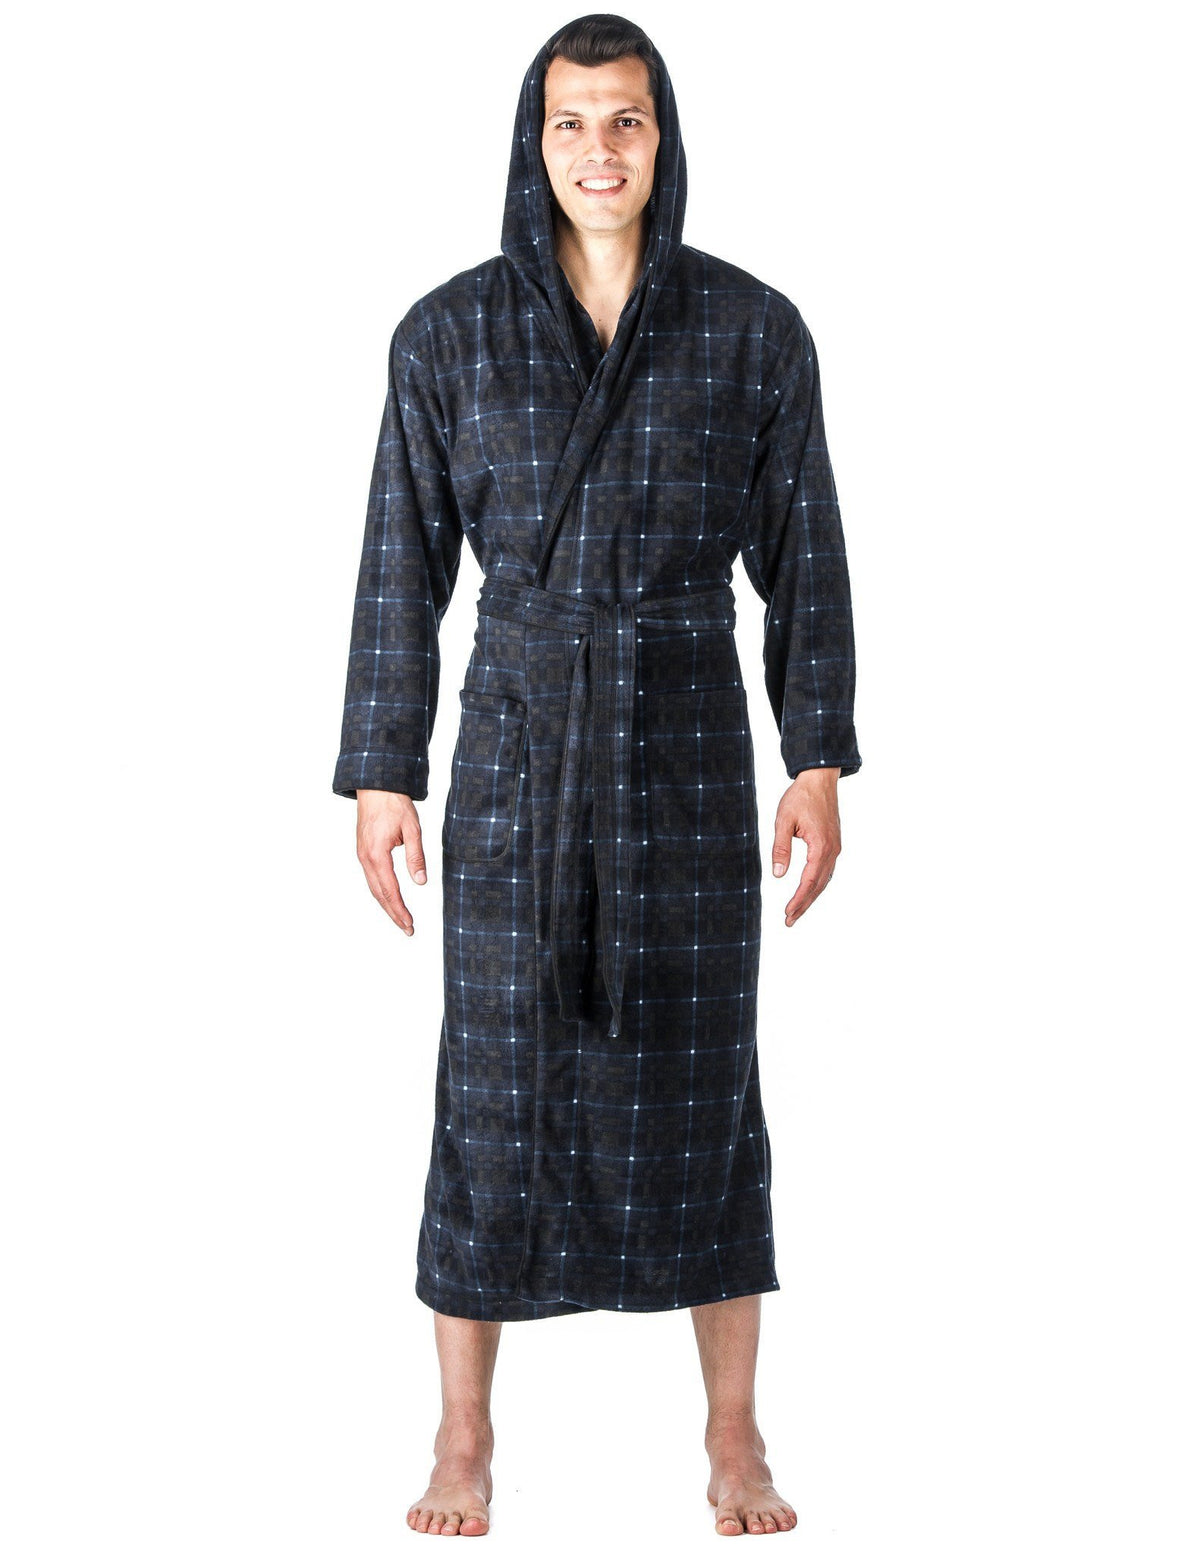 Men's Microfleece Hooded Robe - Plaid Blue